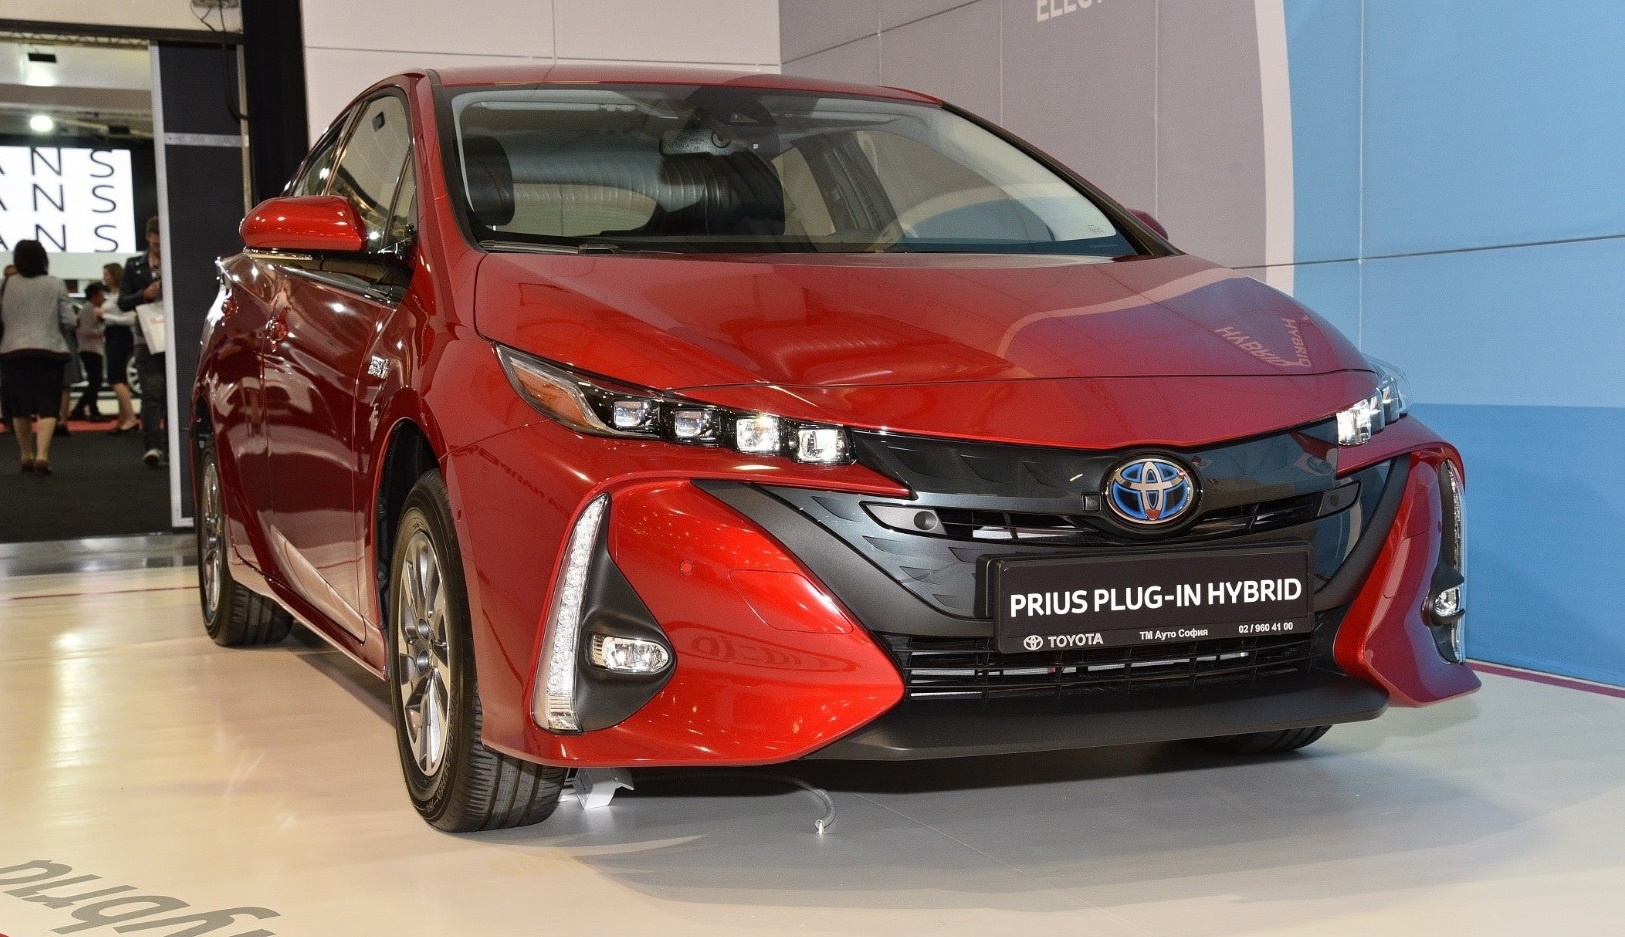 Toyota Prius Plug-in Hybrid presented at Sofia Motor Sho